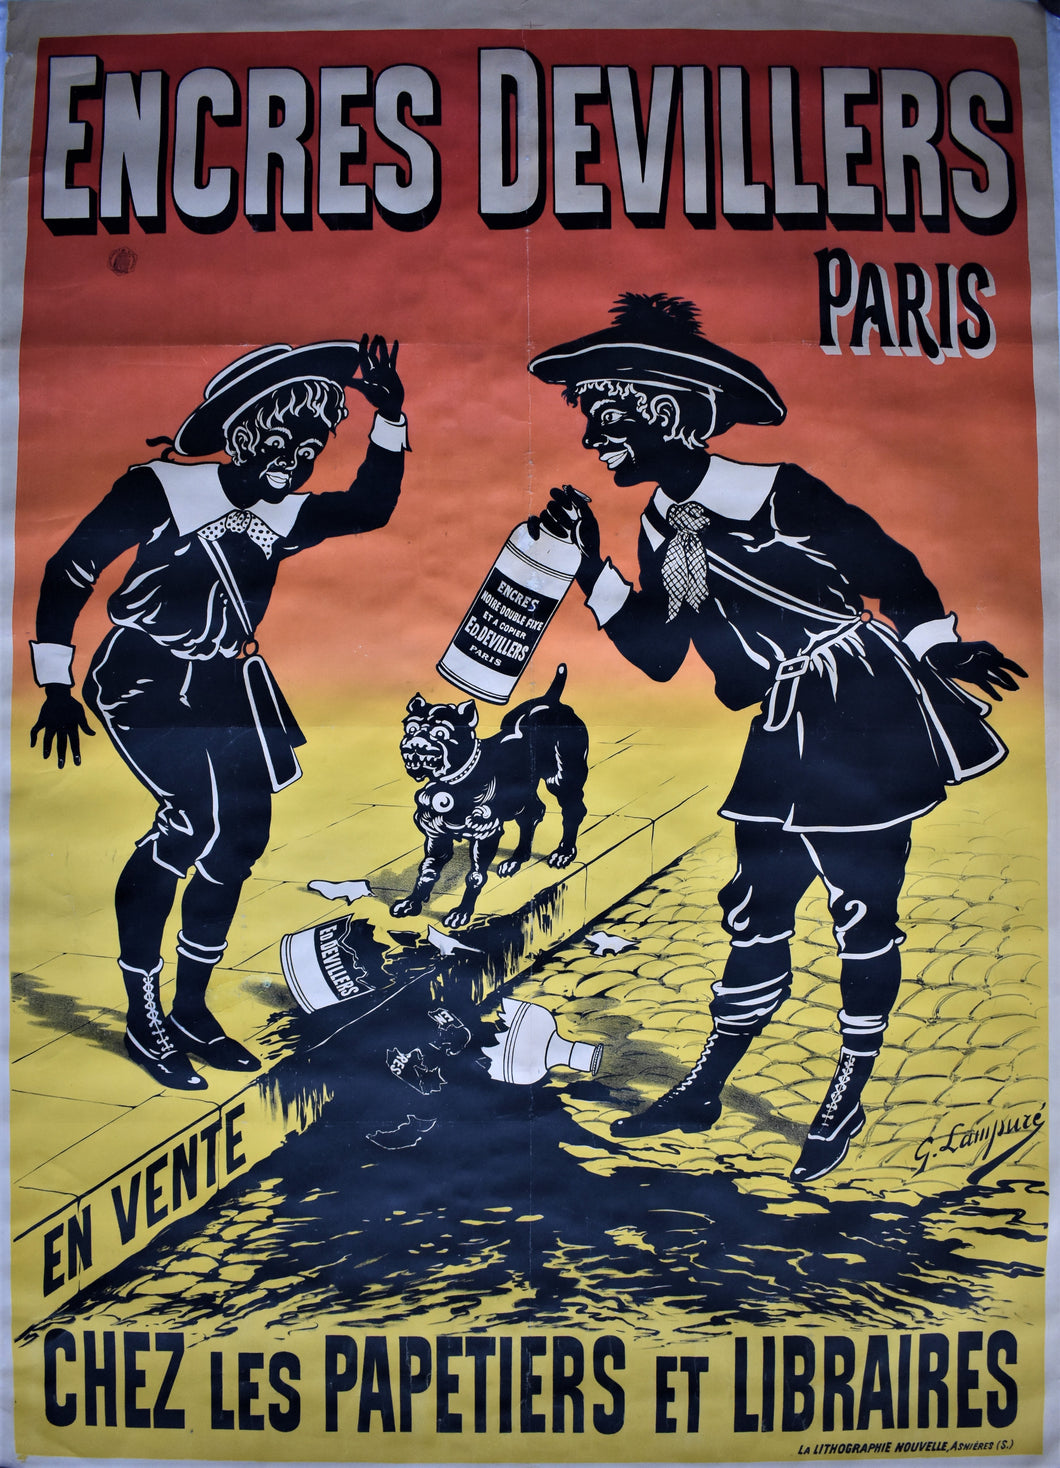 Rare 1890s Original Large Sized French Ink Poster for Encres Devillers - Paris